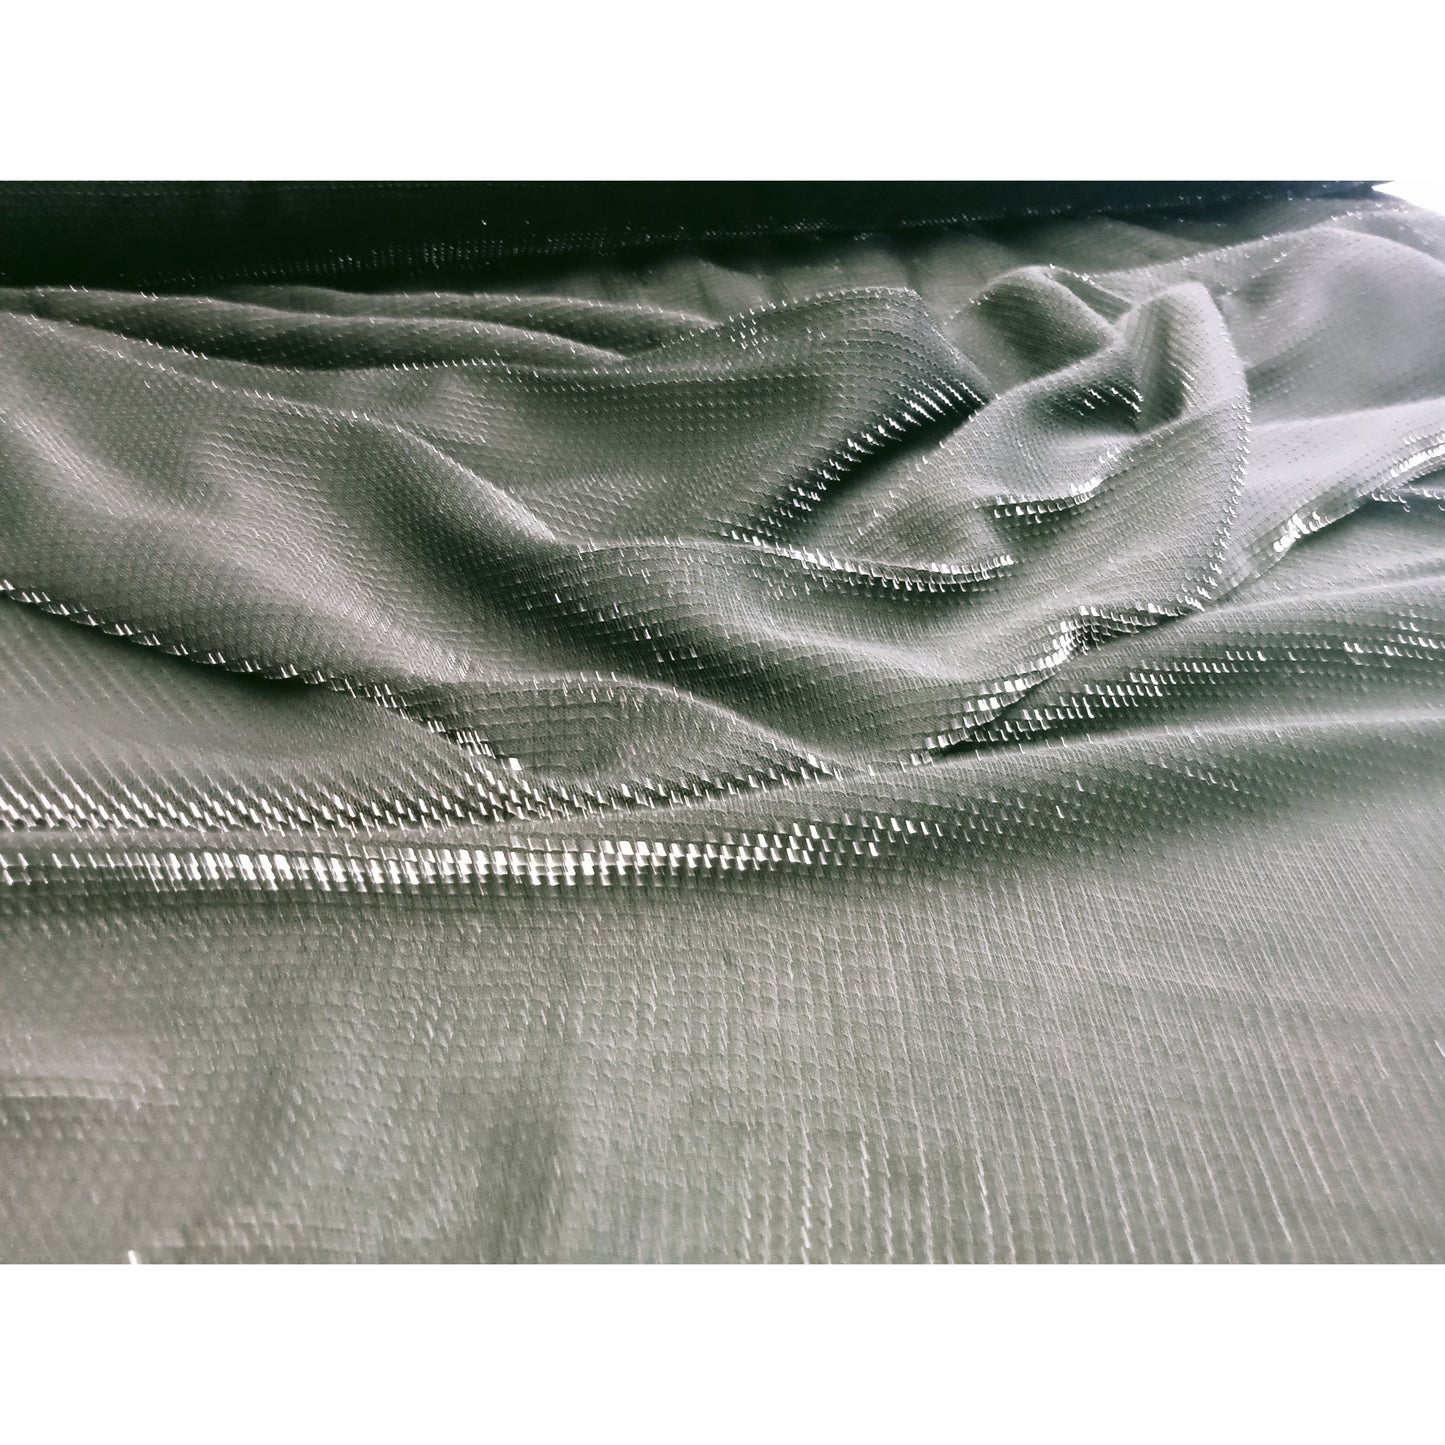 Zeni - stretch knit iridescent fabric